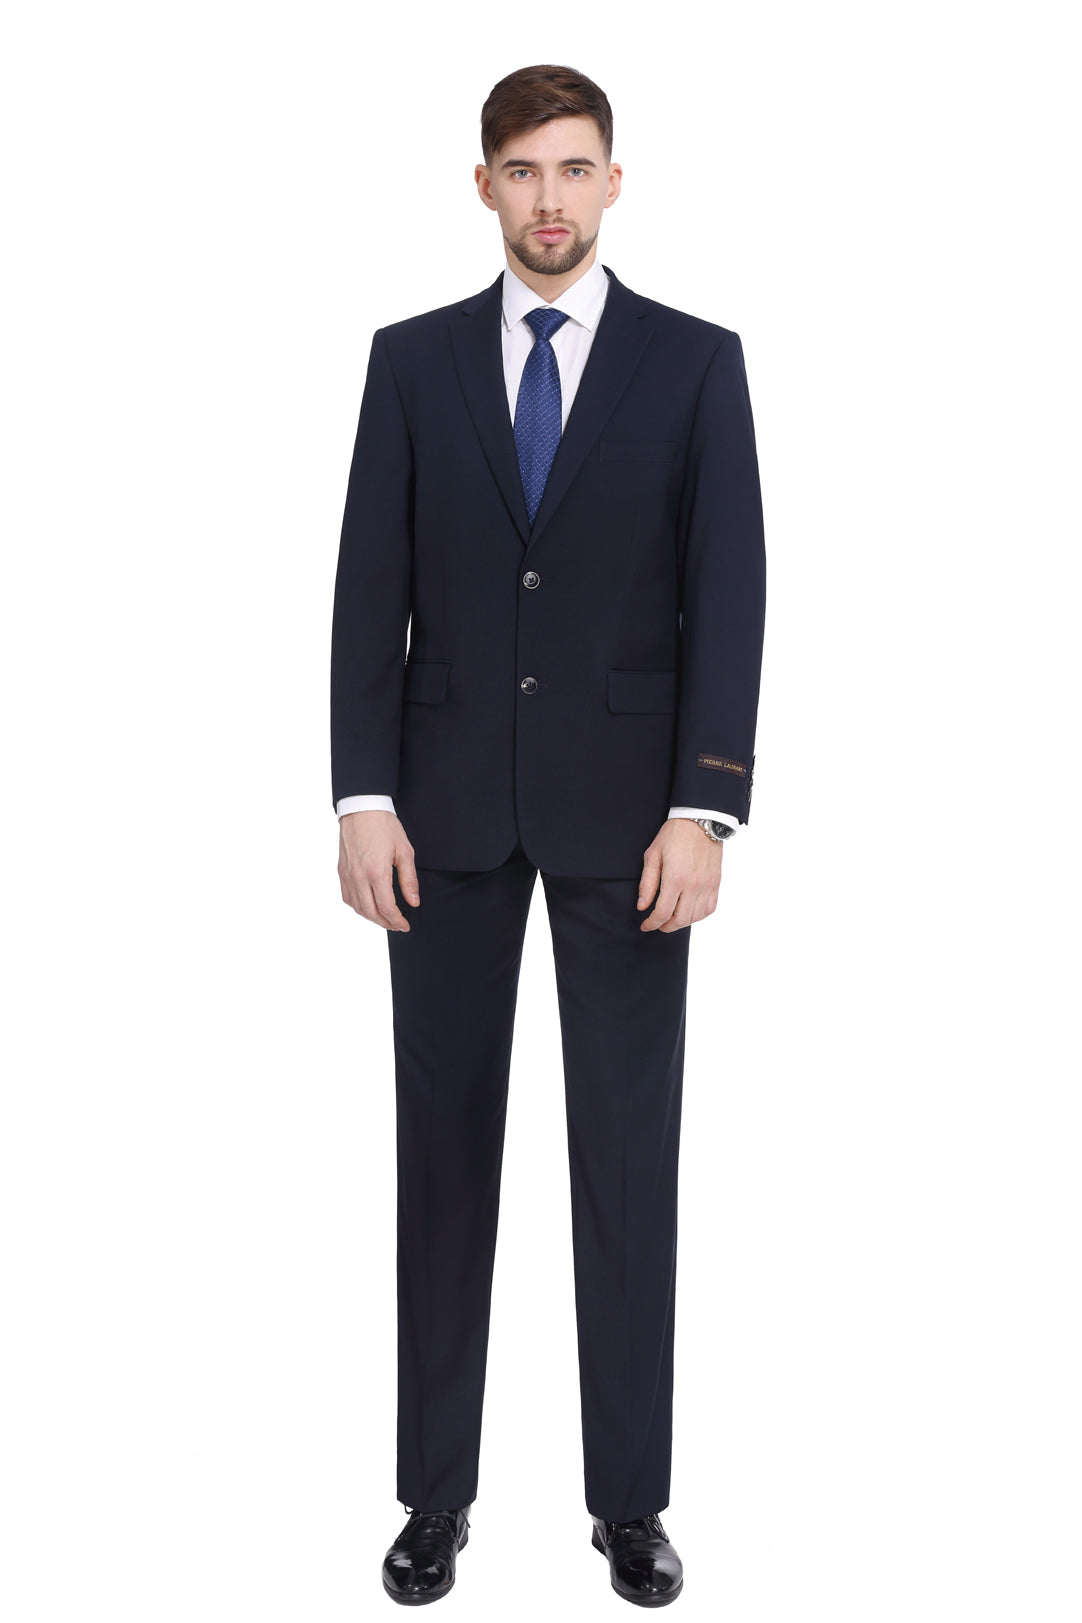 Blazer For Men Designs Brown Tweed Suit Men Vintage Winter Formal Wedding  Suits For Men Men's Classic Suit 3 Pieces Men Suit